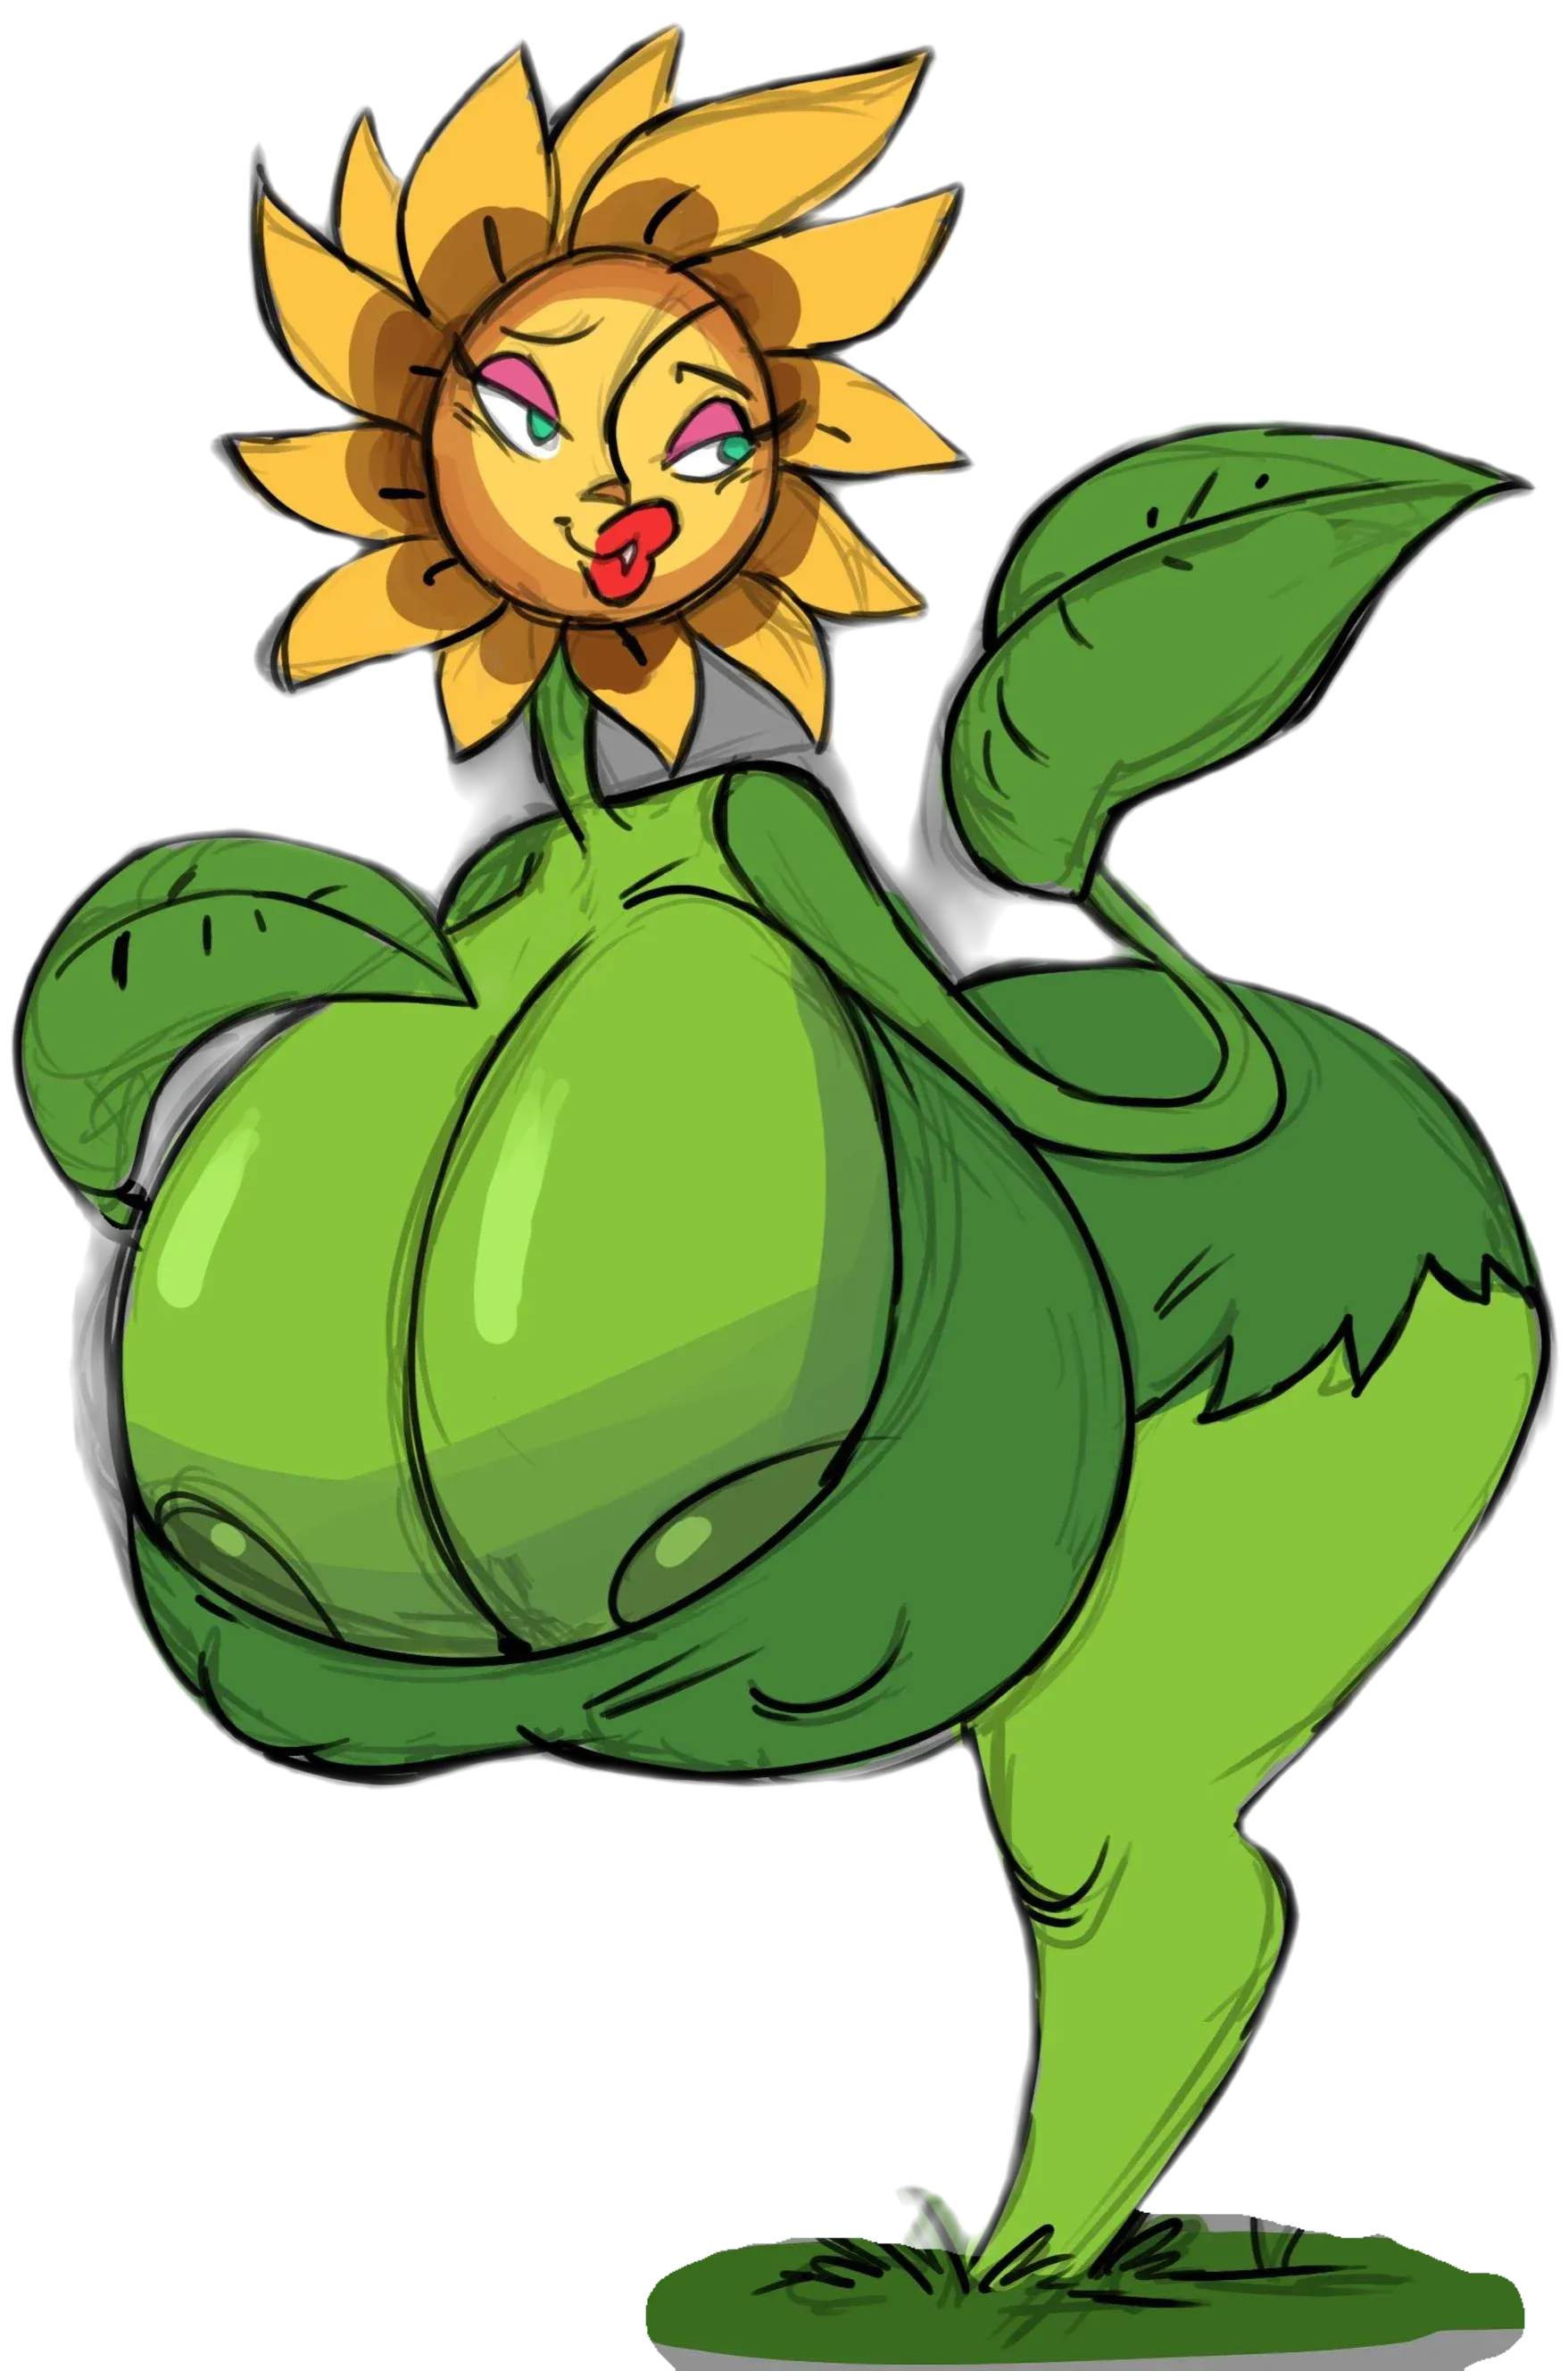 Avatar of Miss Sunflower